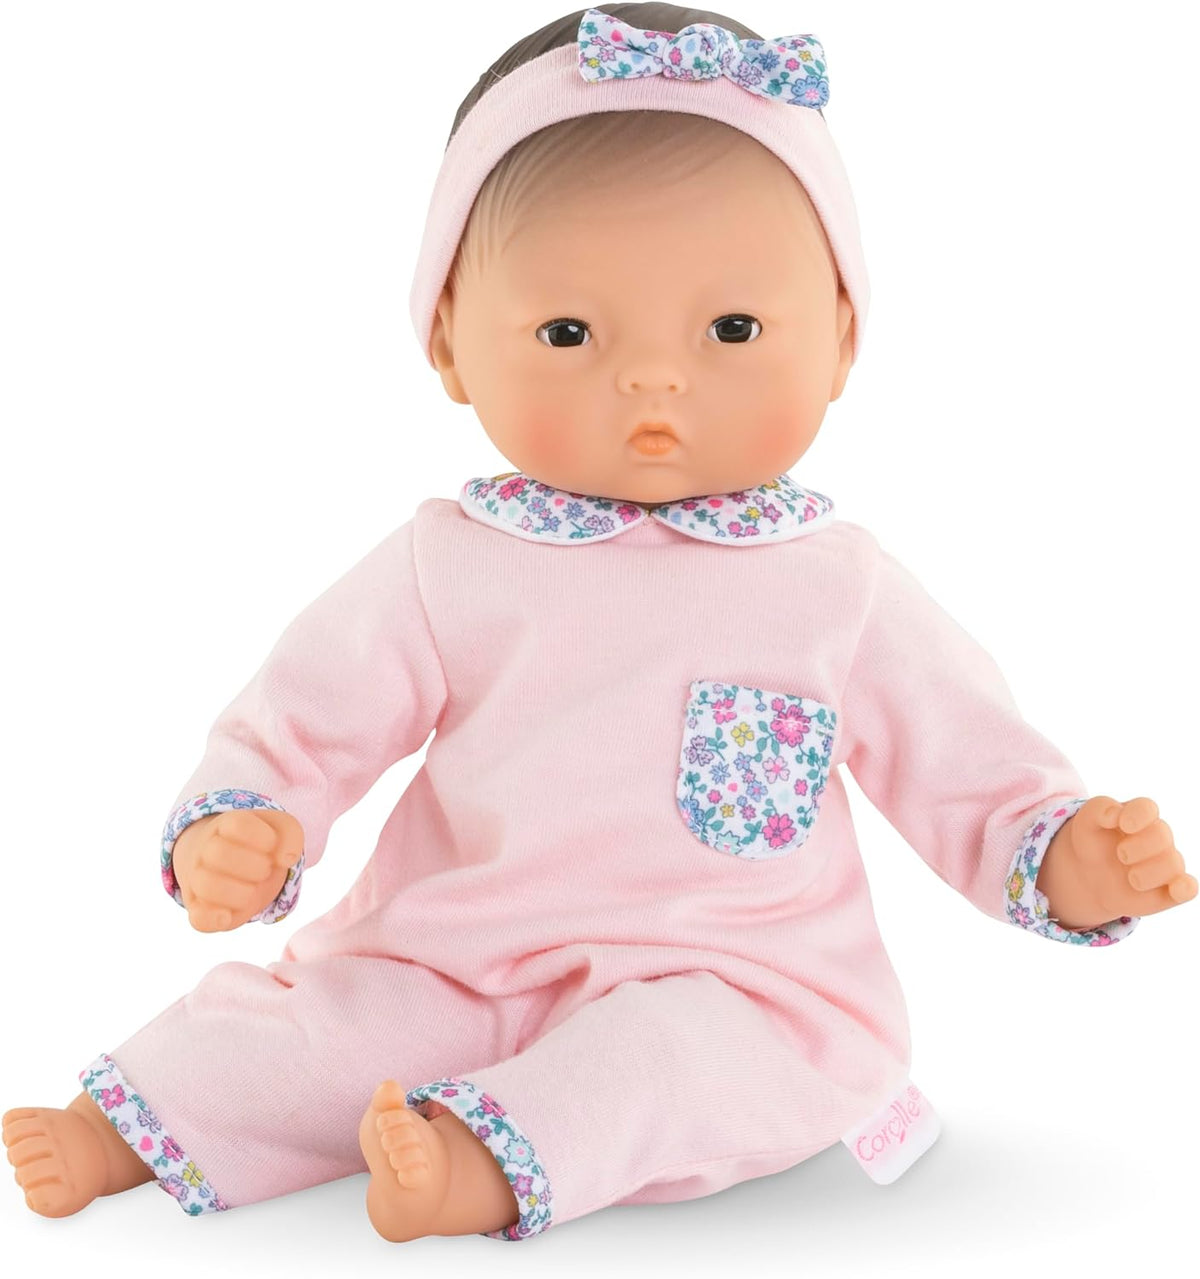 12” Baby Doll Calin - Mila